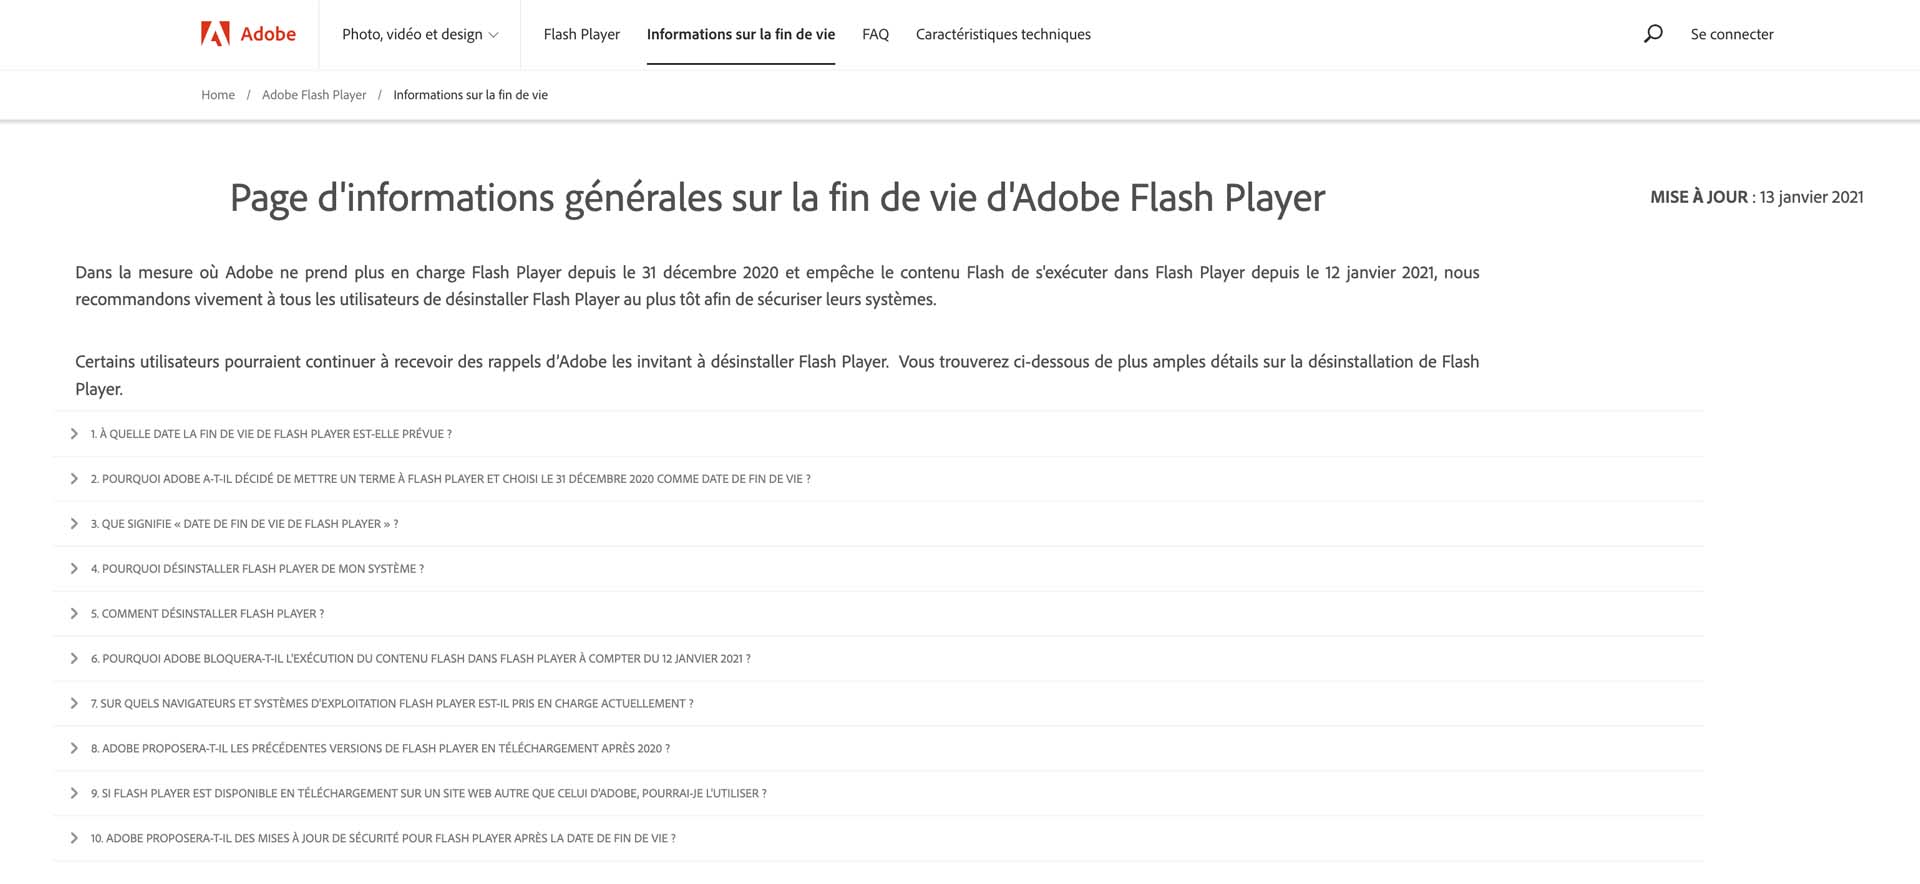 Adobe Flash Player - Adobe Flash Player